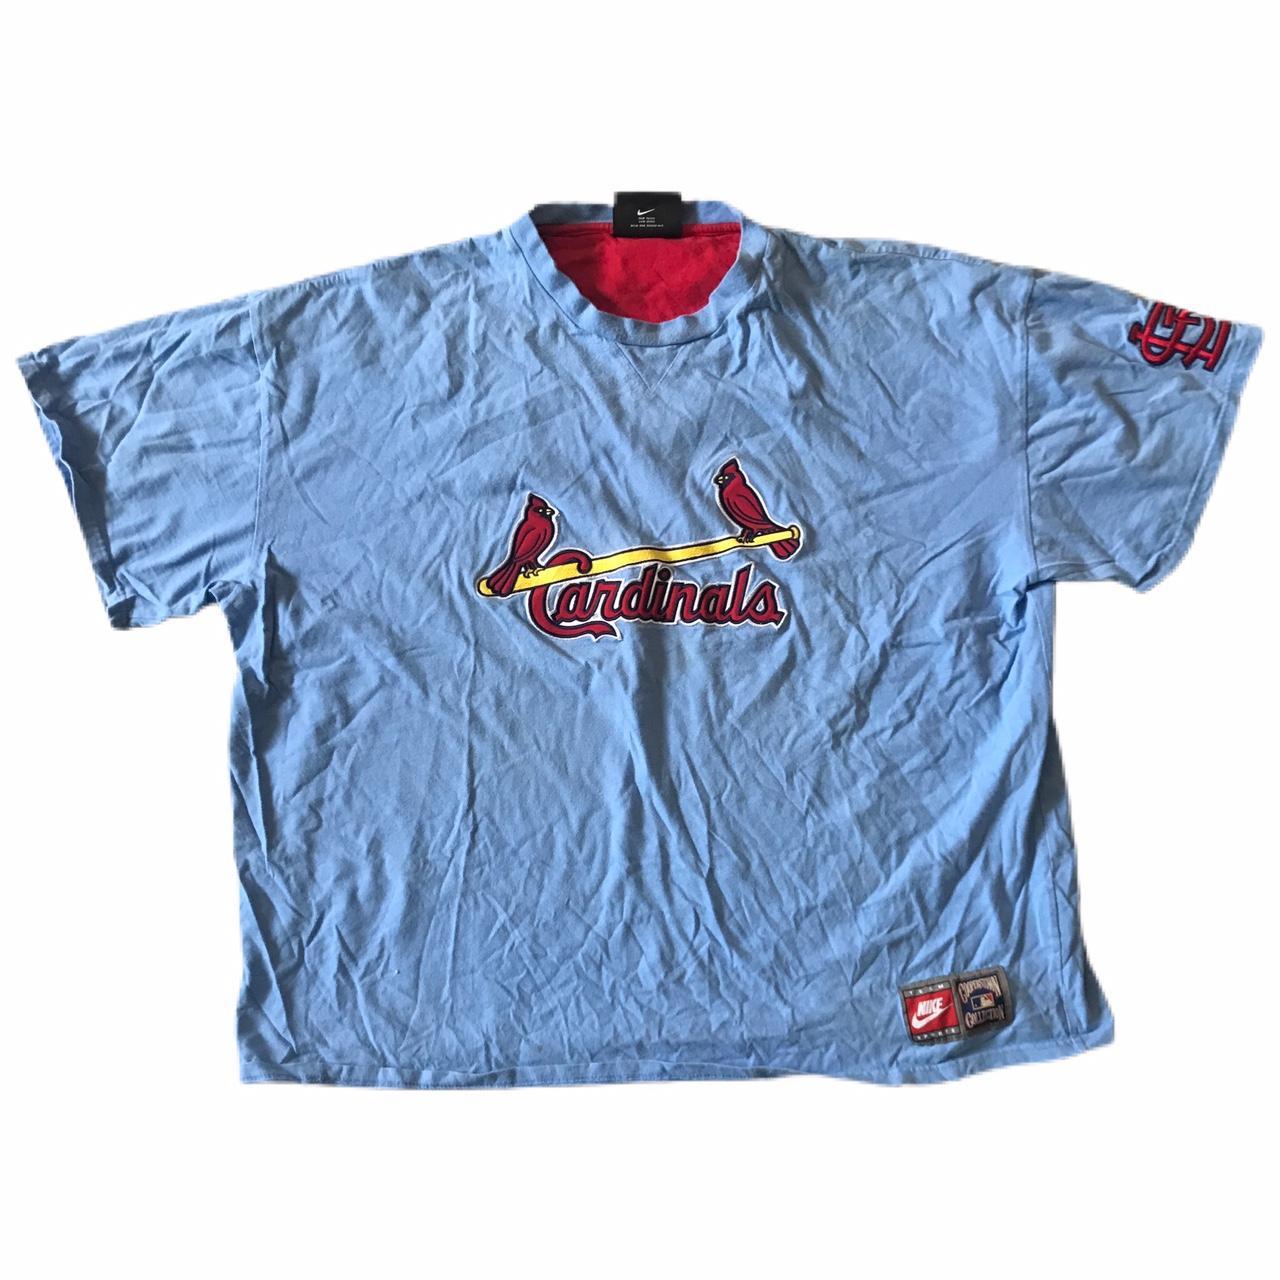 Vintage Cardinals T-shirt Nike, Cooperstown - Depop